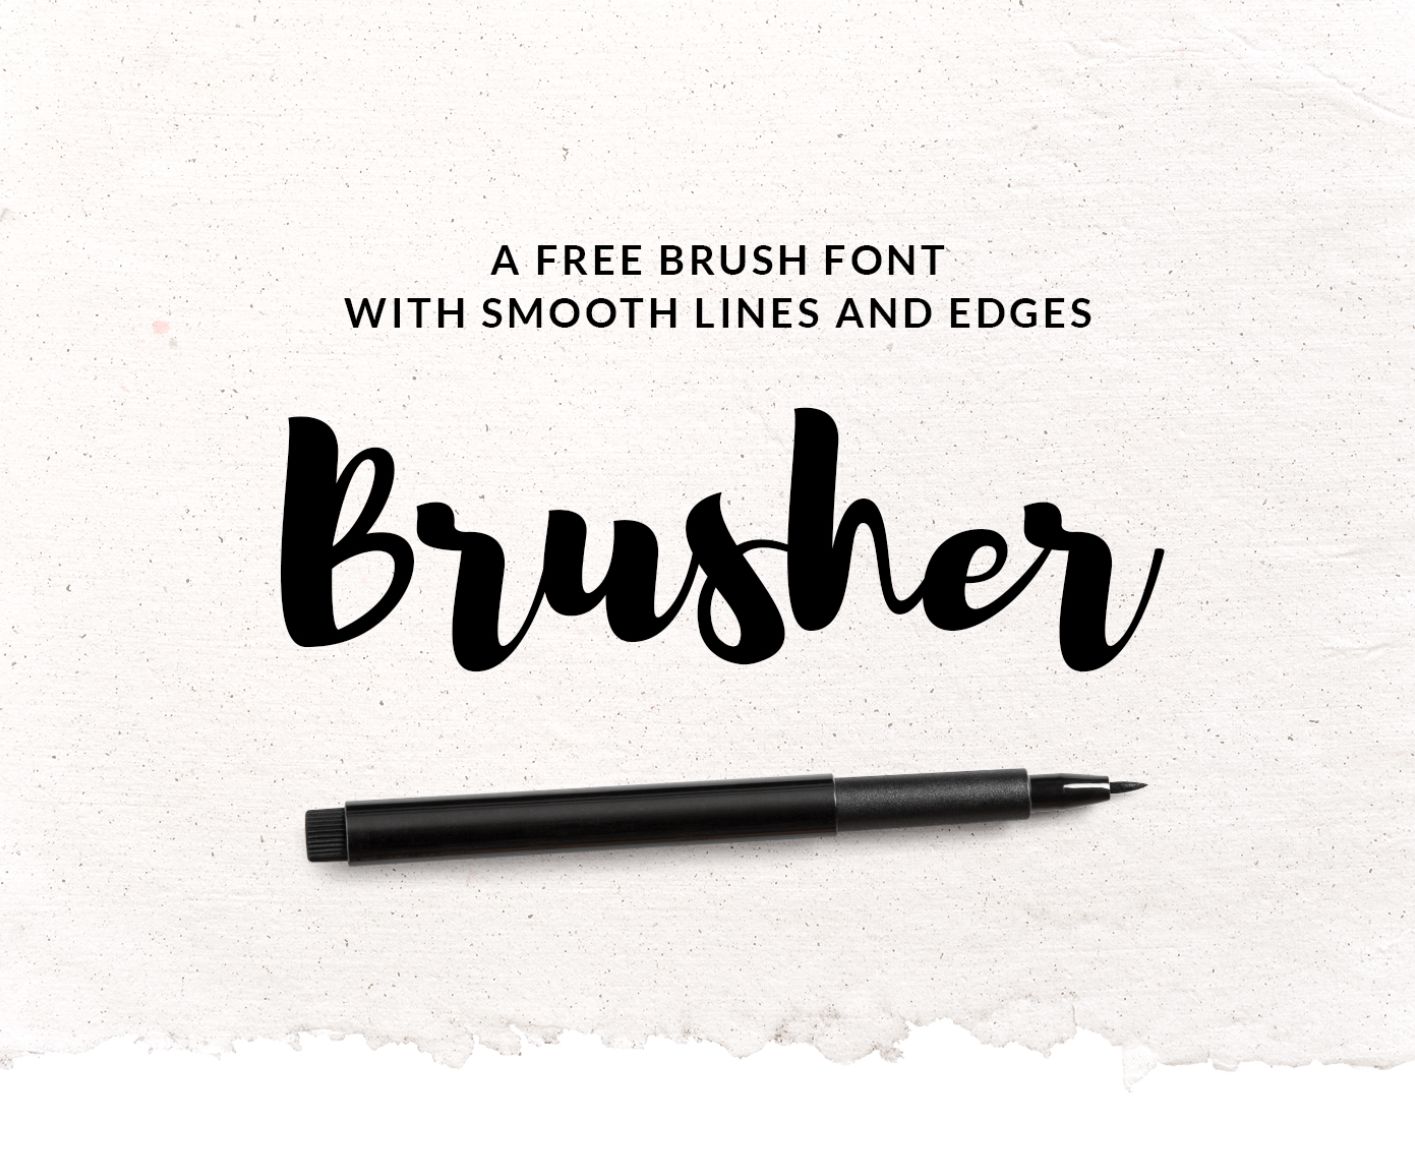 Brusher Font Free Download